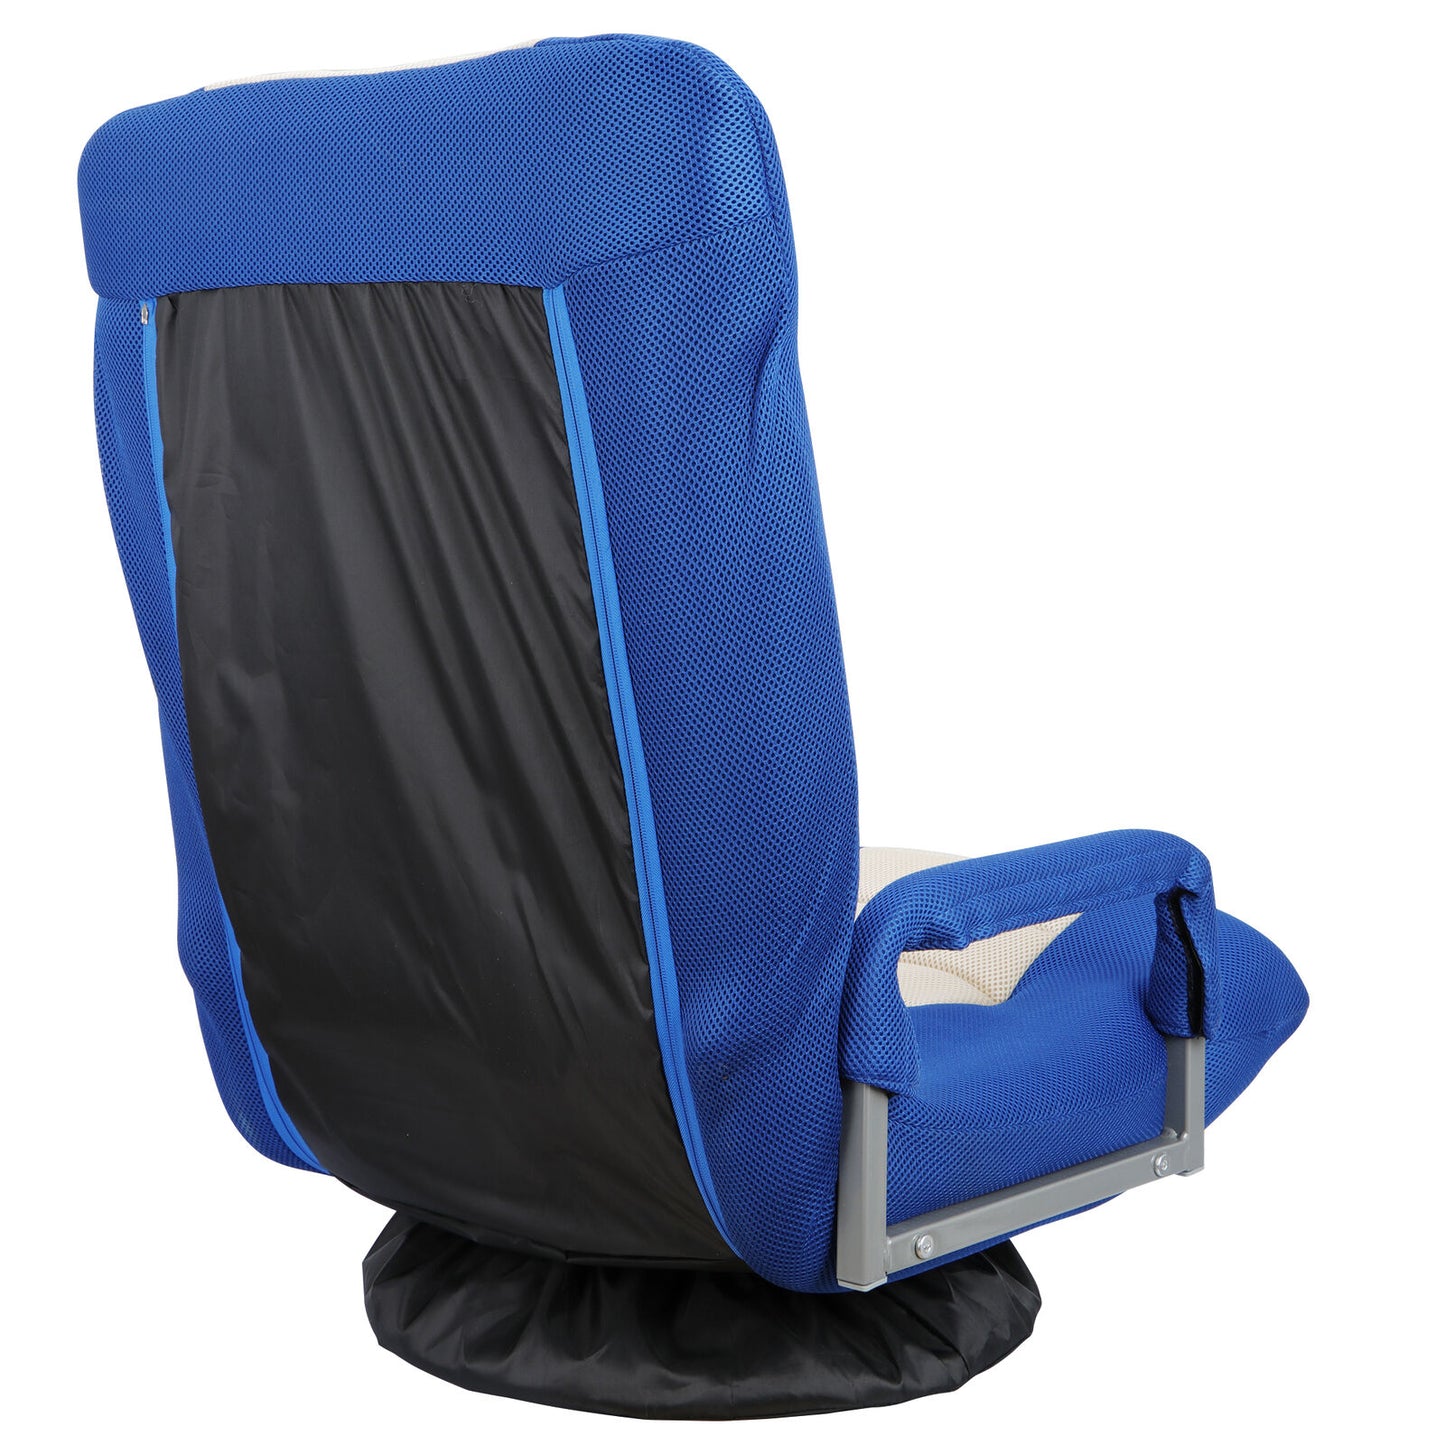 360-Degree Swivel Gaming Floor Chair Folding Adjustable Swivel with Armrest Blue